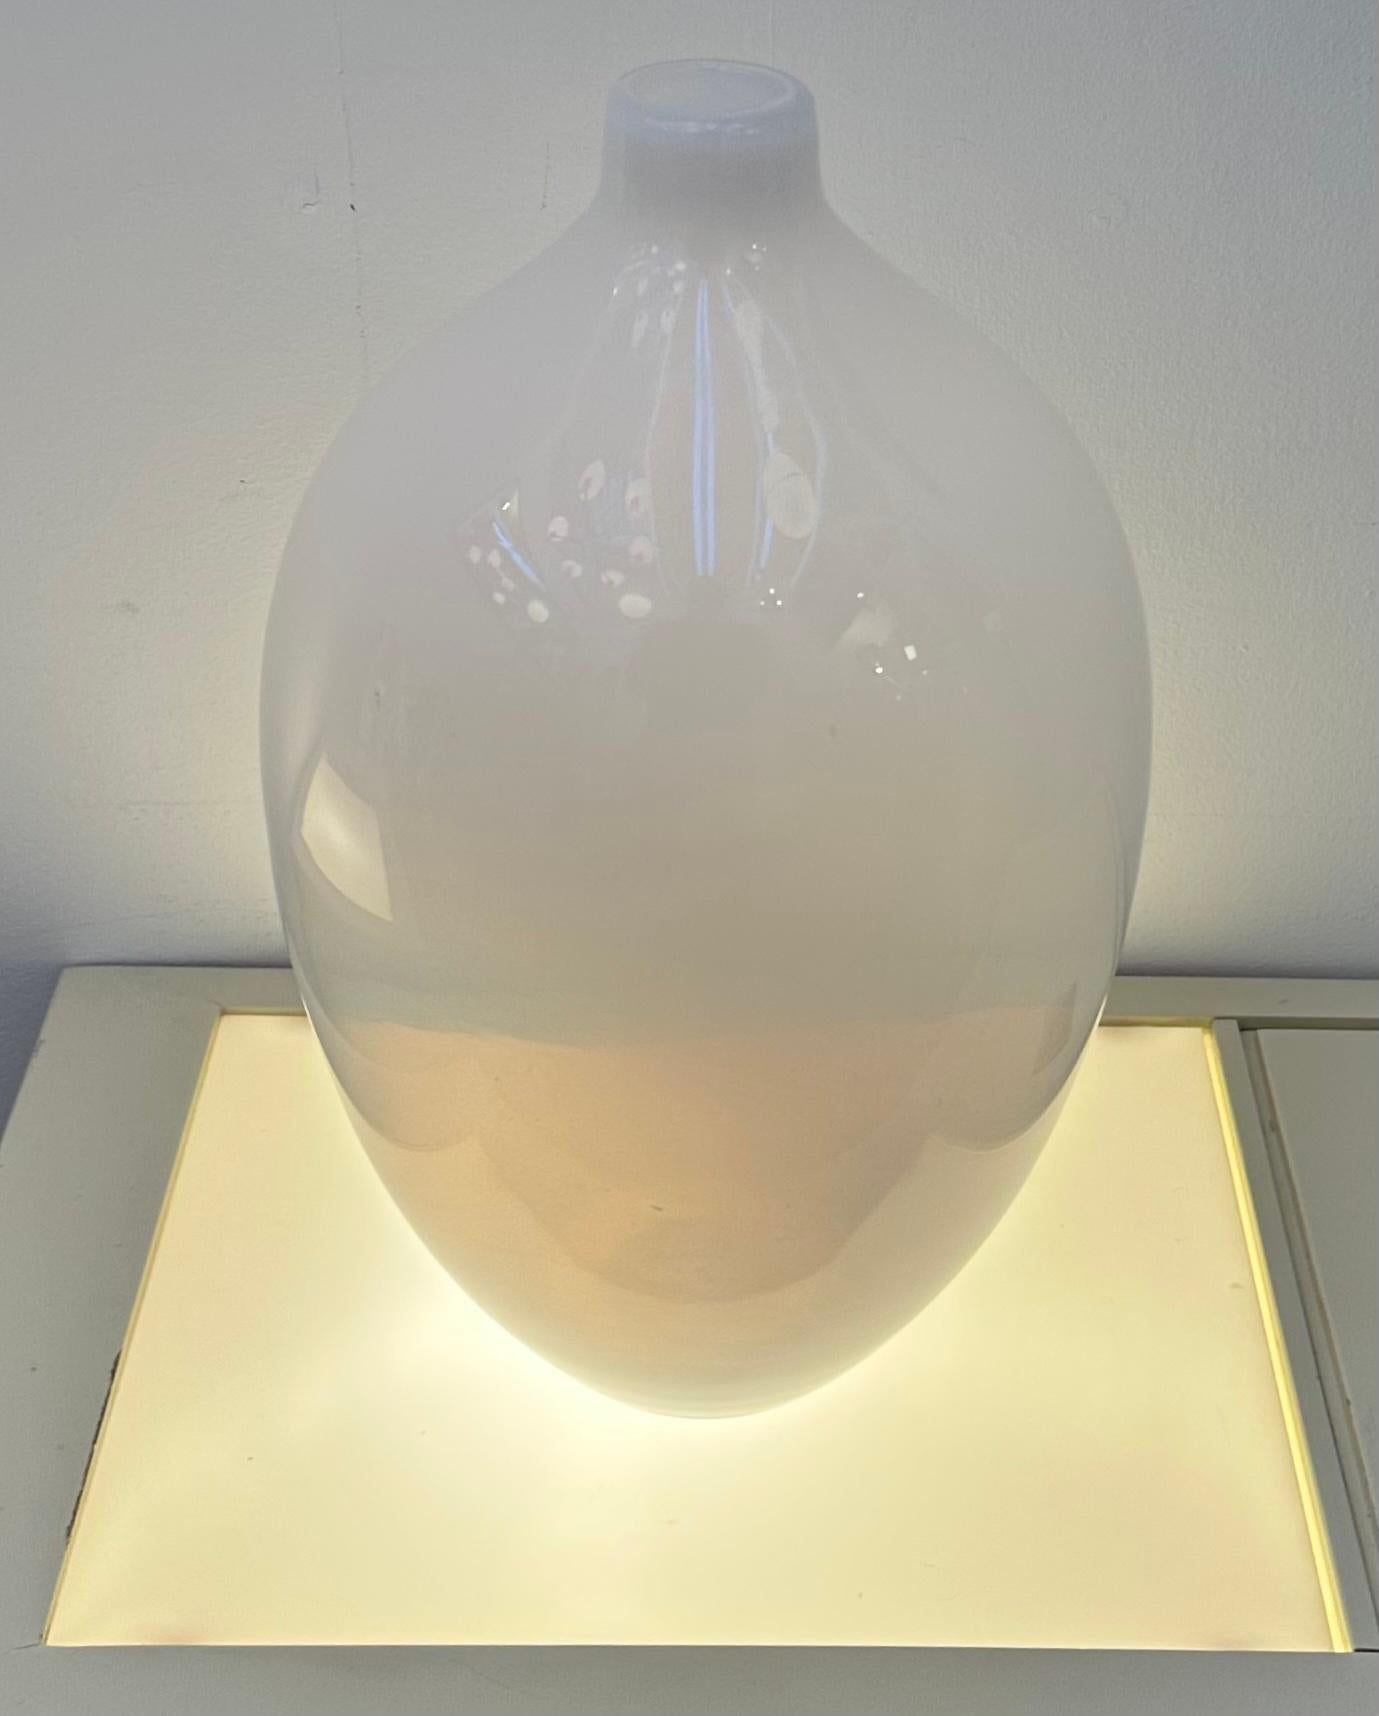 1960s Vintage Italian Milky-White Opalescent Handblown Glass Oviod Form Vase For Sale 1